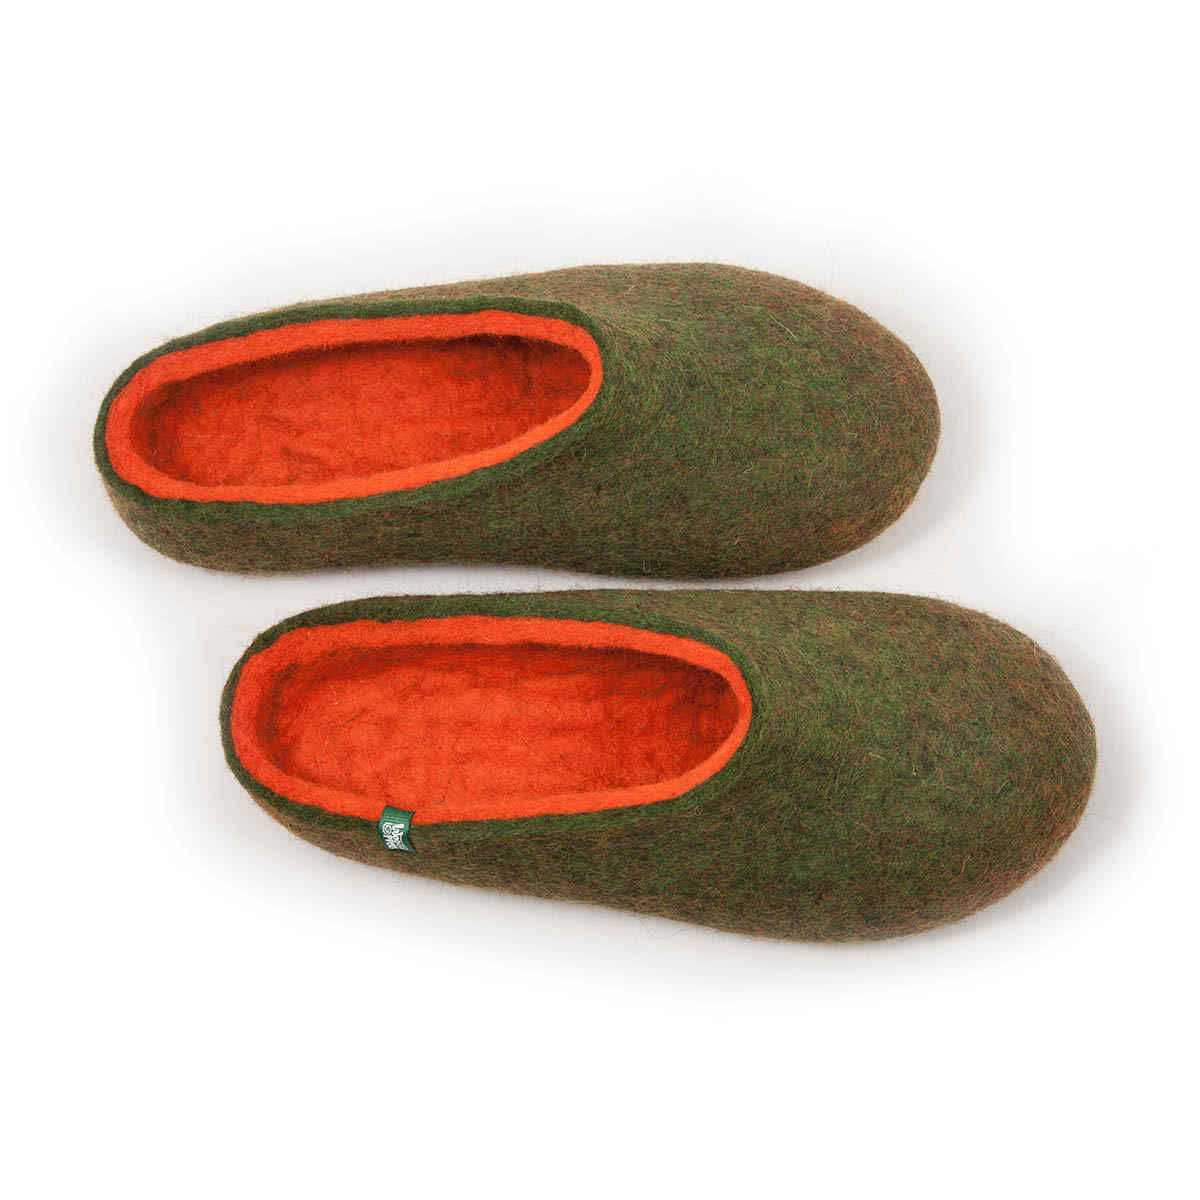 slippers for home “COLORI” green-orange